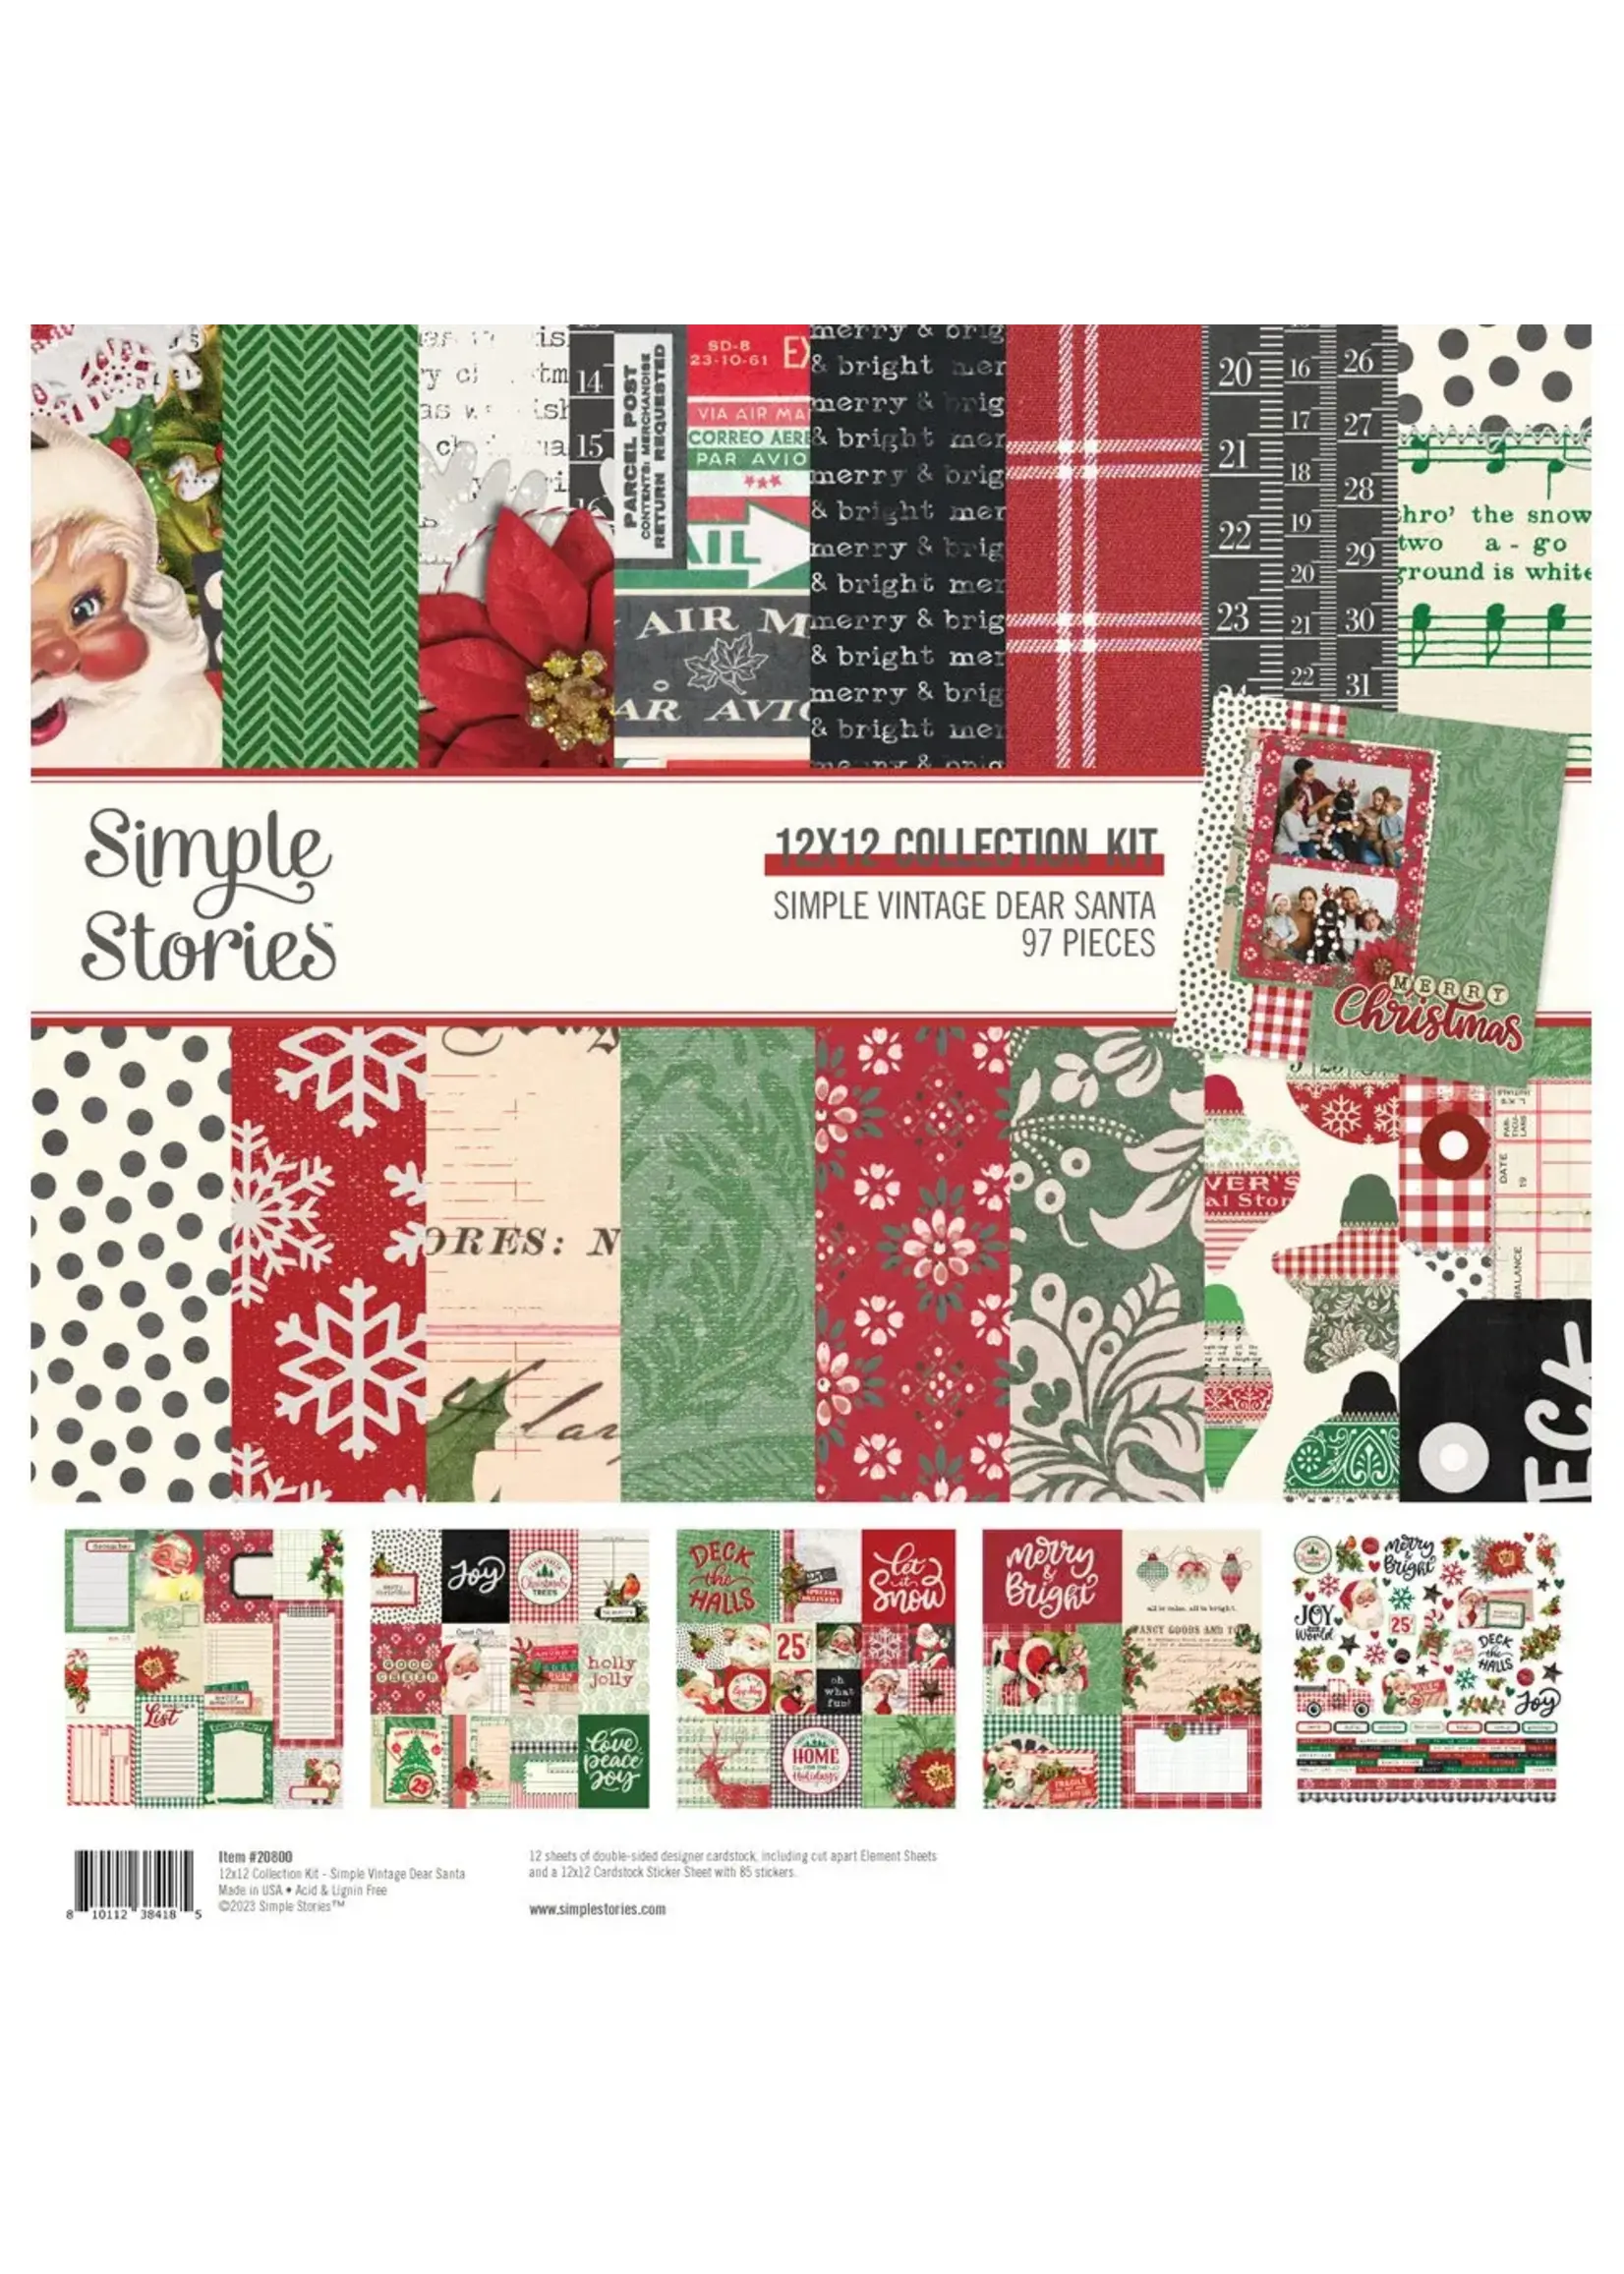 simple stories Simple Vintage Dear Santa Collection Kit (20800)